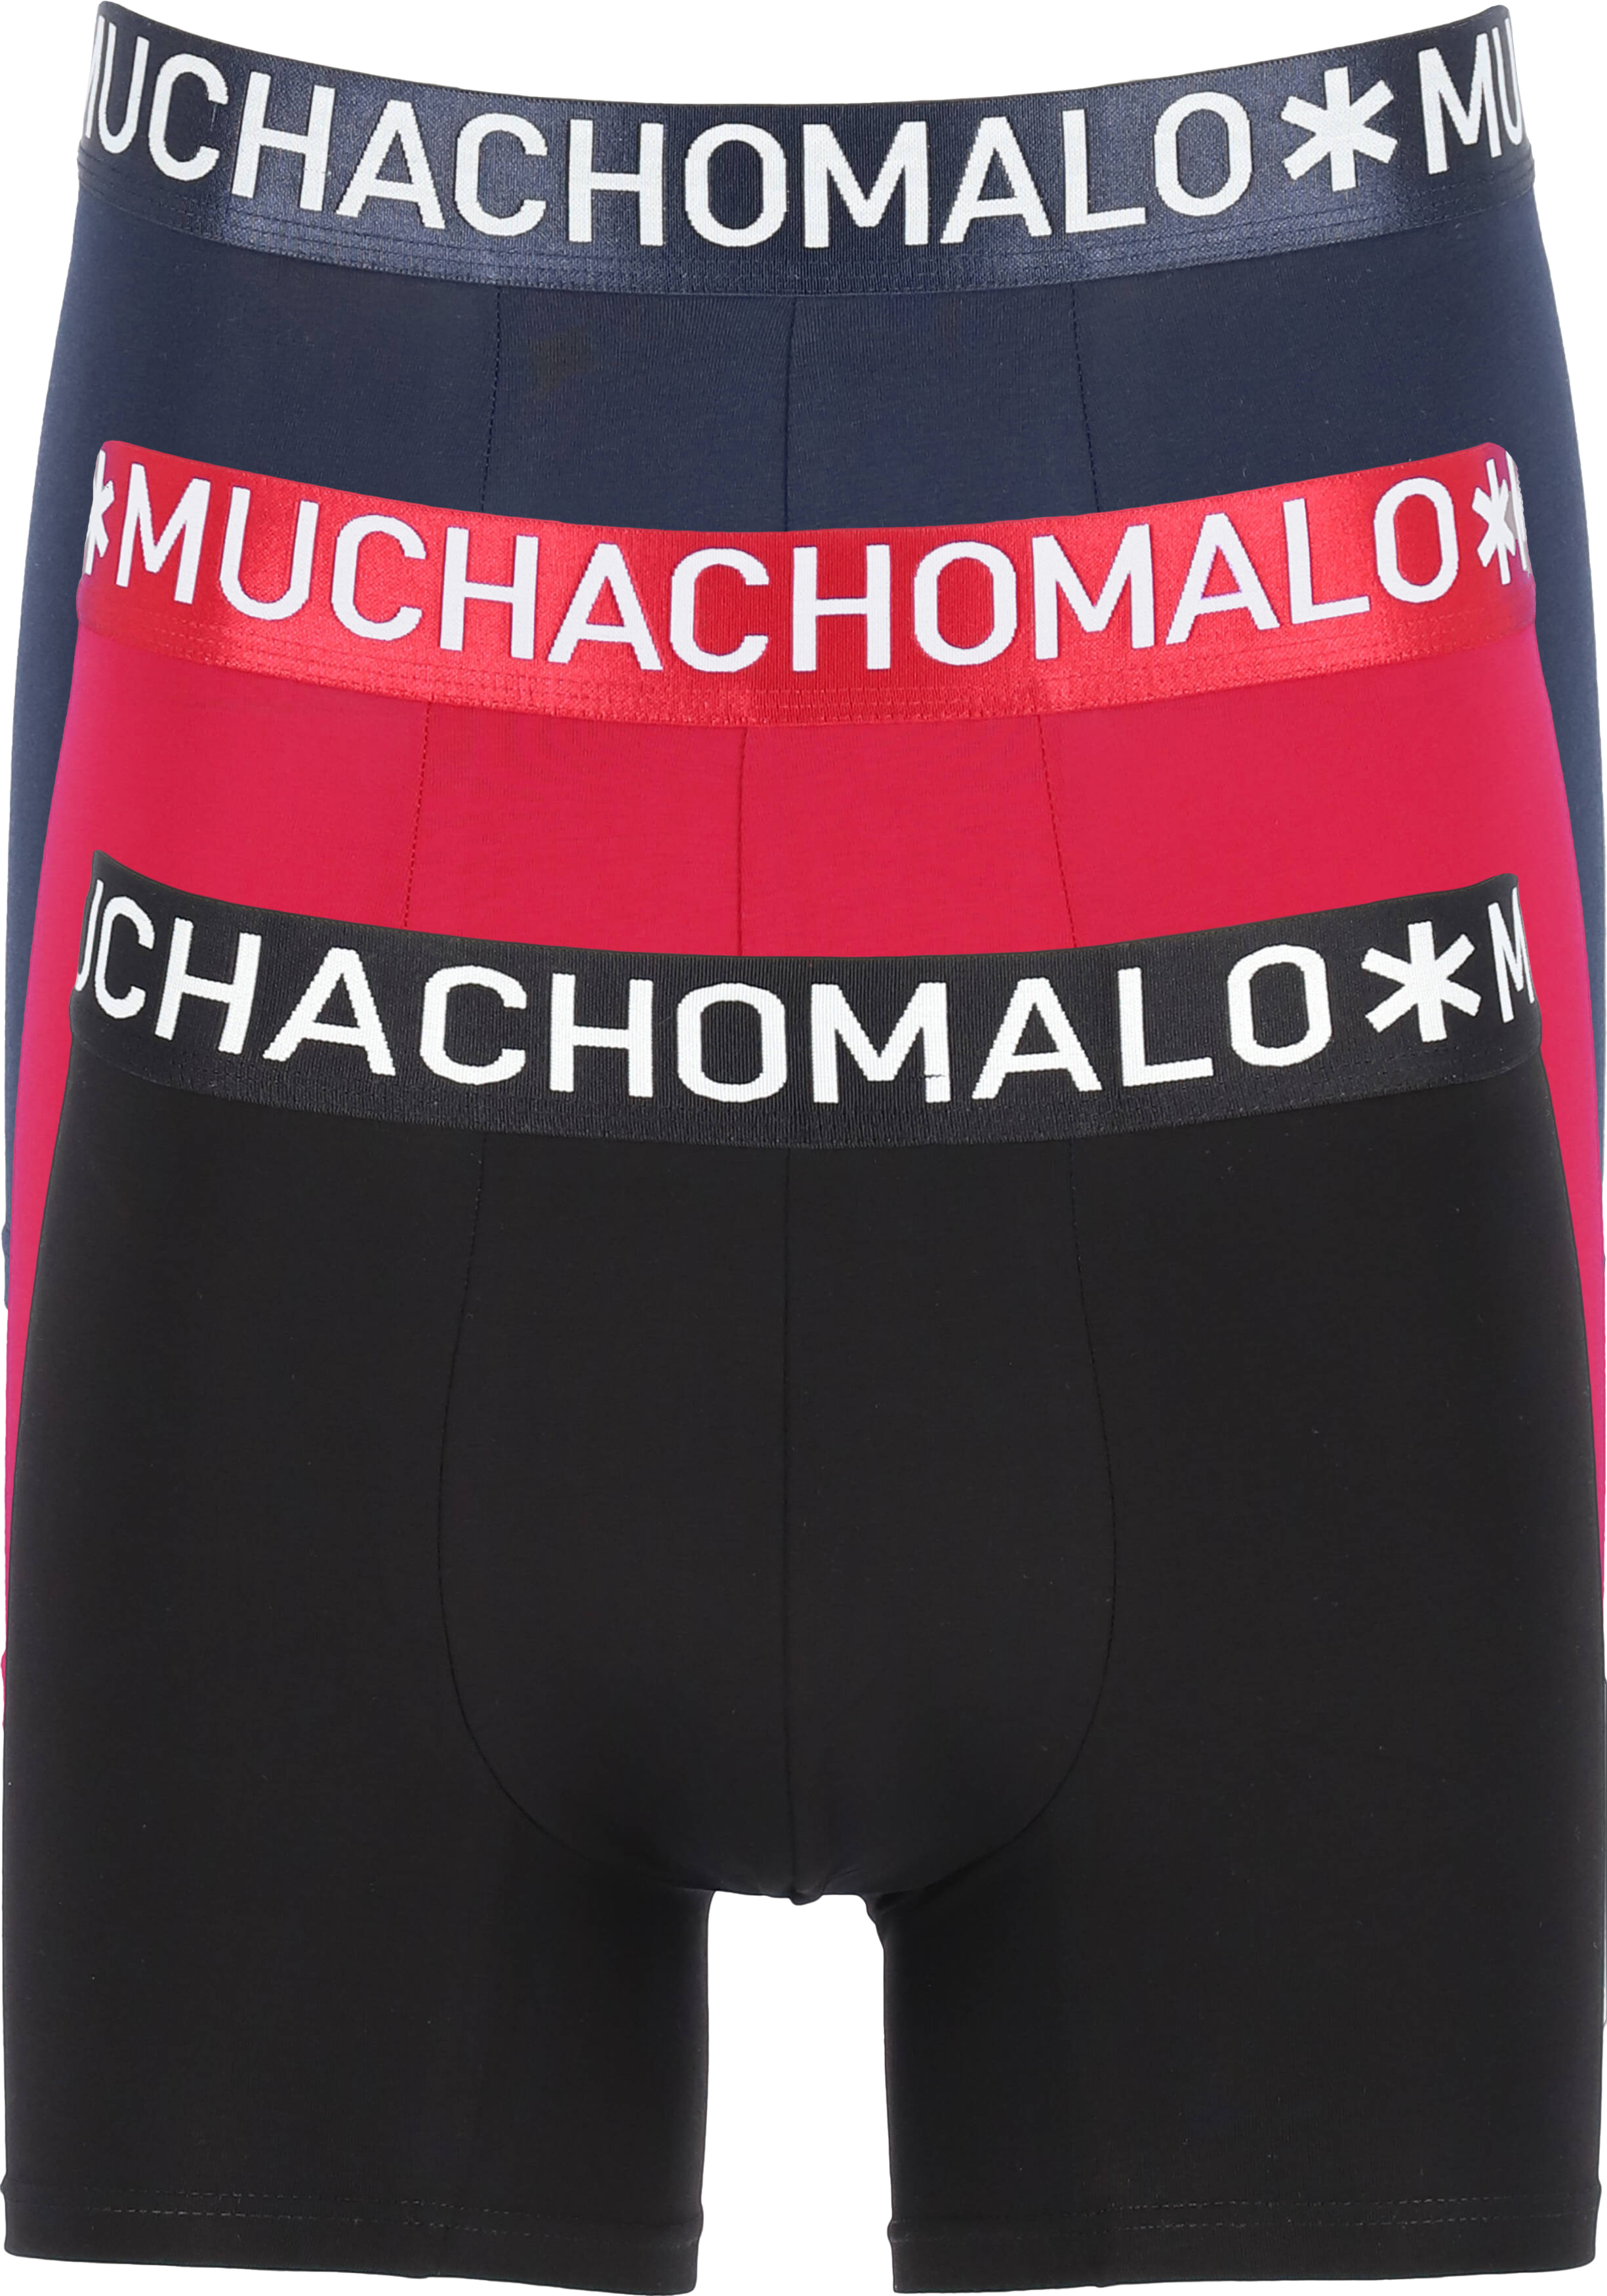 Muchachomalo Light Cotton boxershorts (3-pack), heren boxers normale lengte, blauw, rood en zwart